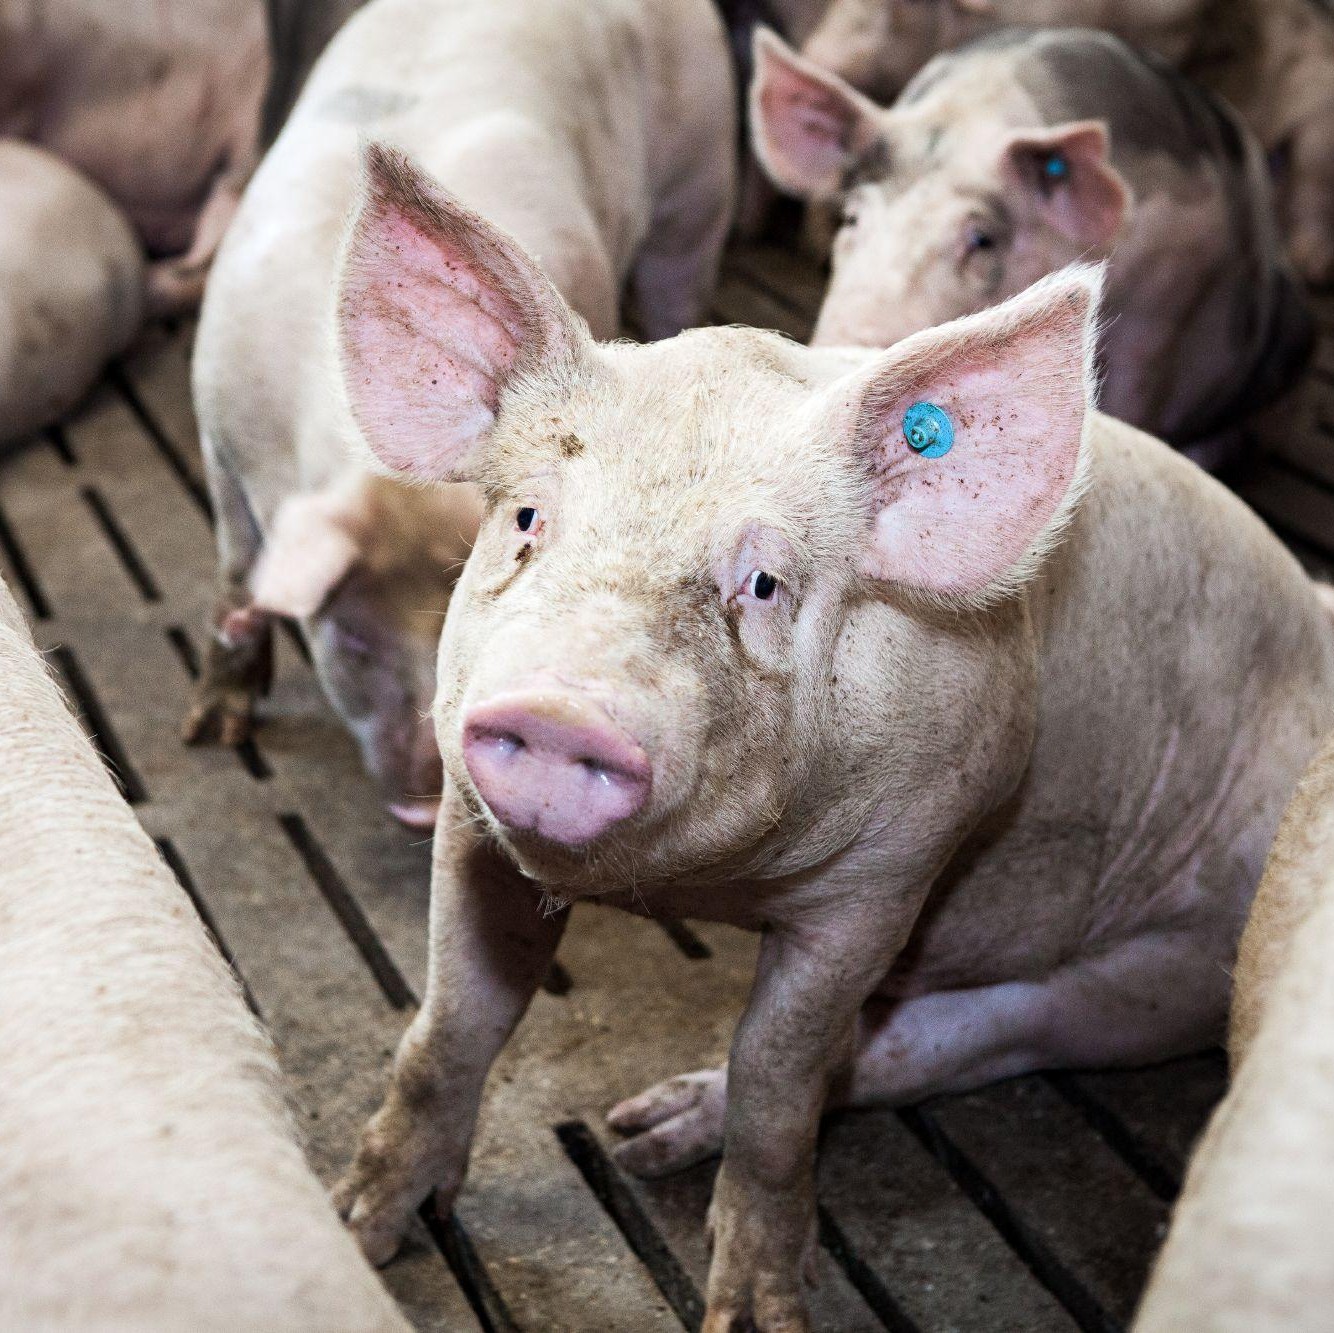 Mutilated pig on a pig farm